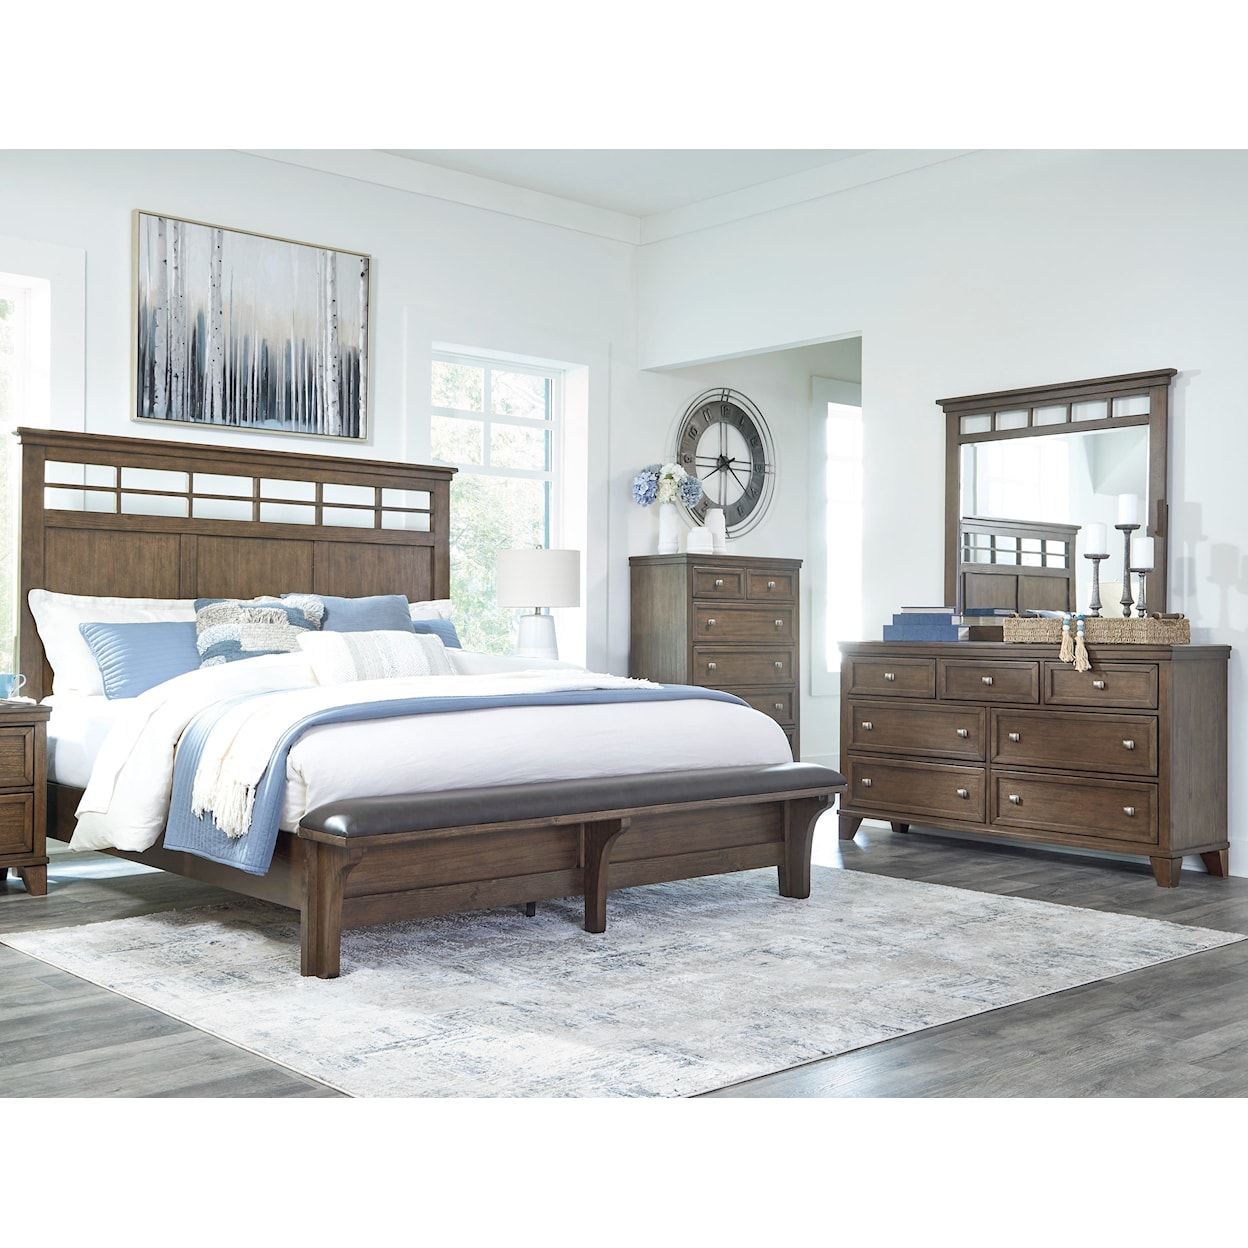 Ashley Furniture Benchcraft Shawbeck California King Bedroom Set